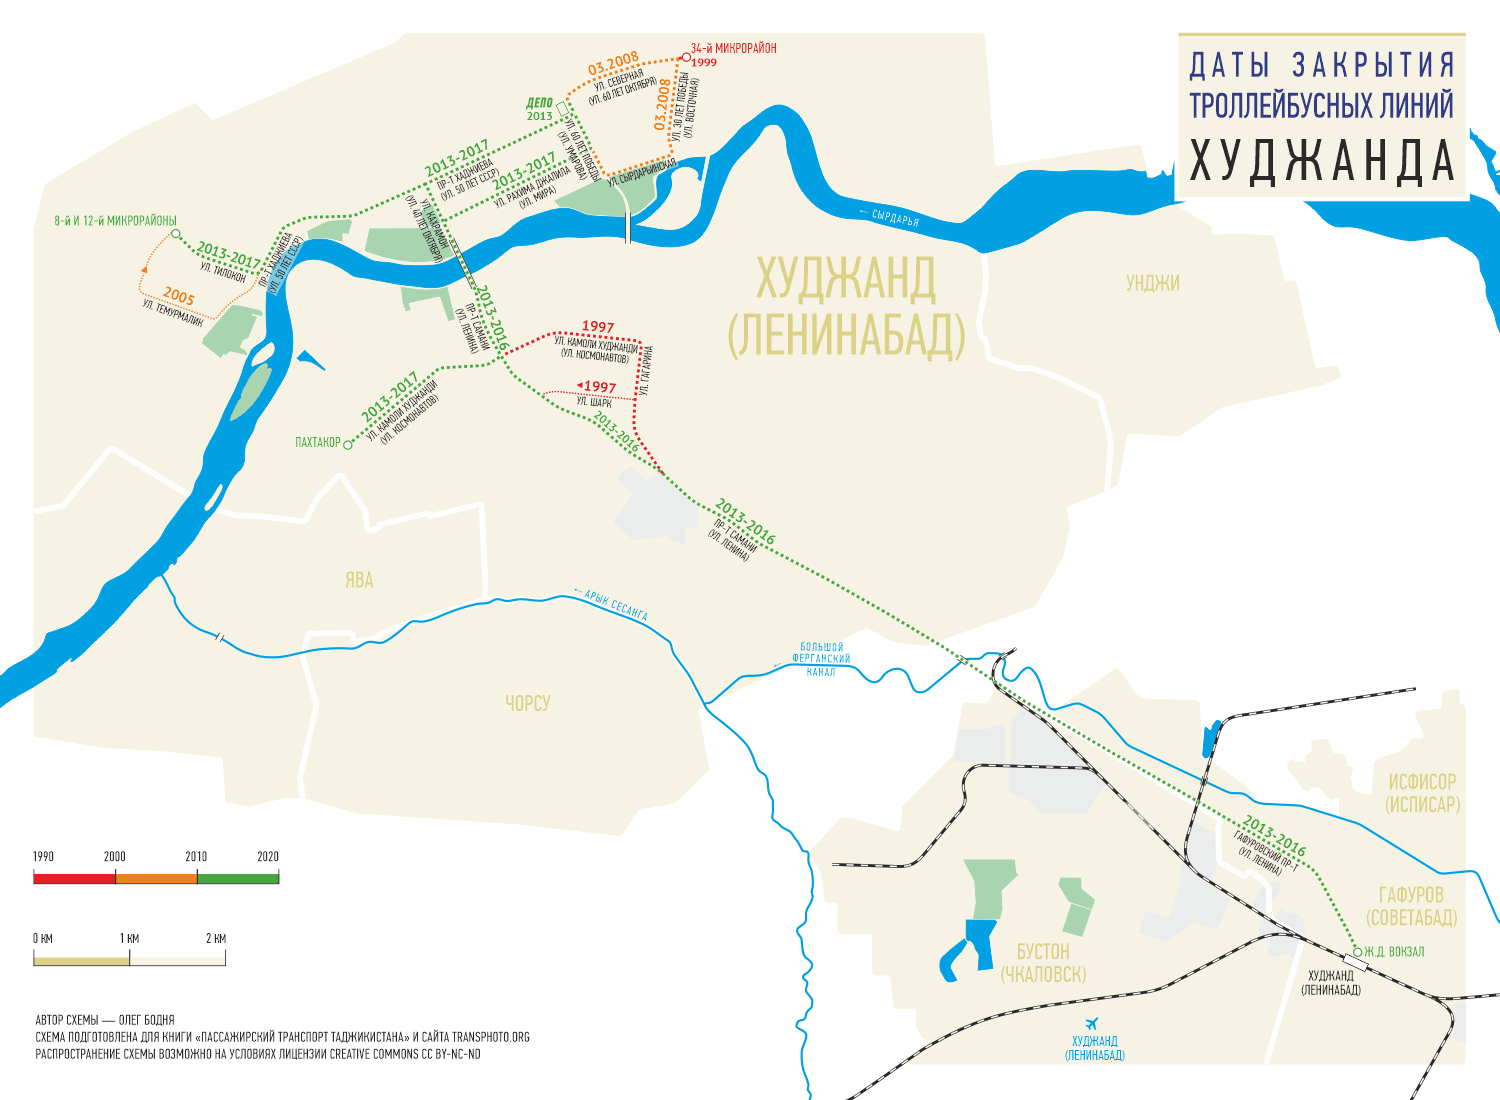 Khudzhand — Maps; Khudzhand — Tajikistan mass transit